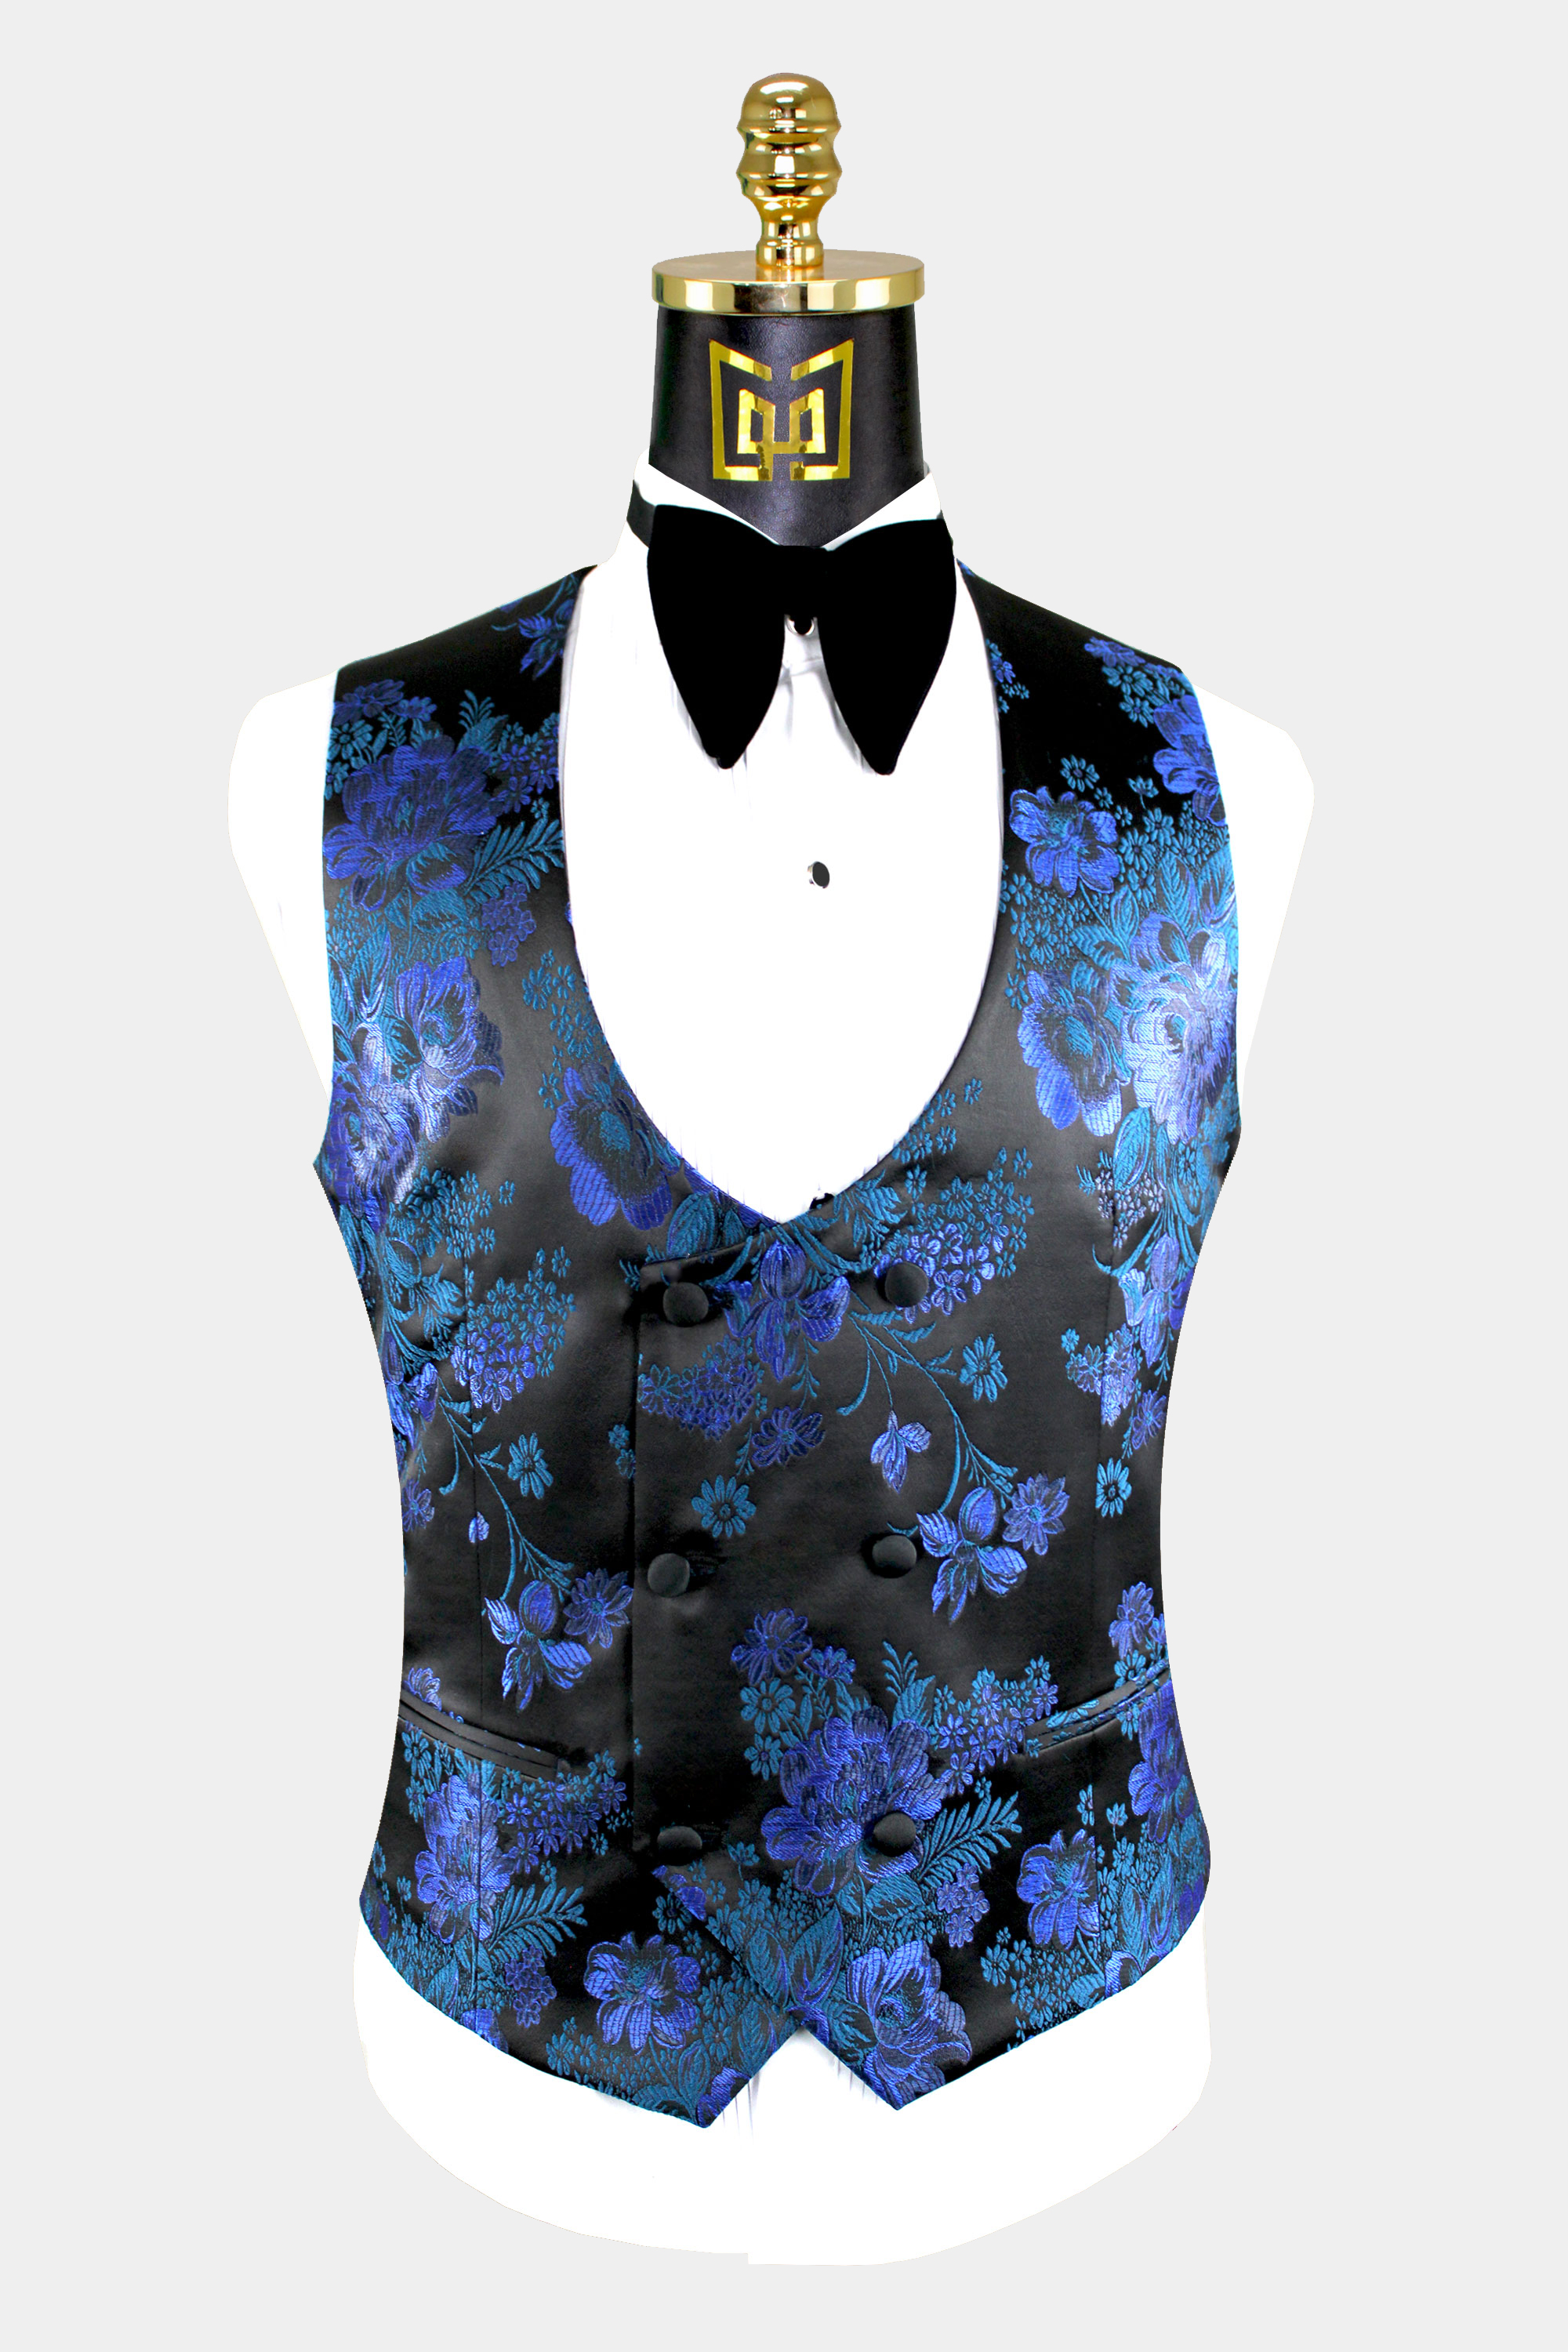 Mens-Black-and-Royal-Blue-Tuxedo-Vest-Floral-Waistcoat-from-Gentlemansguru.com